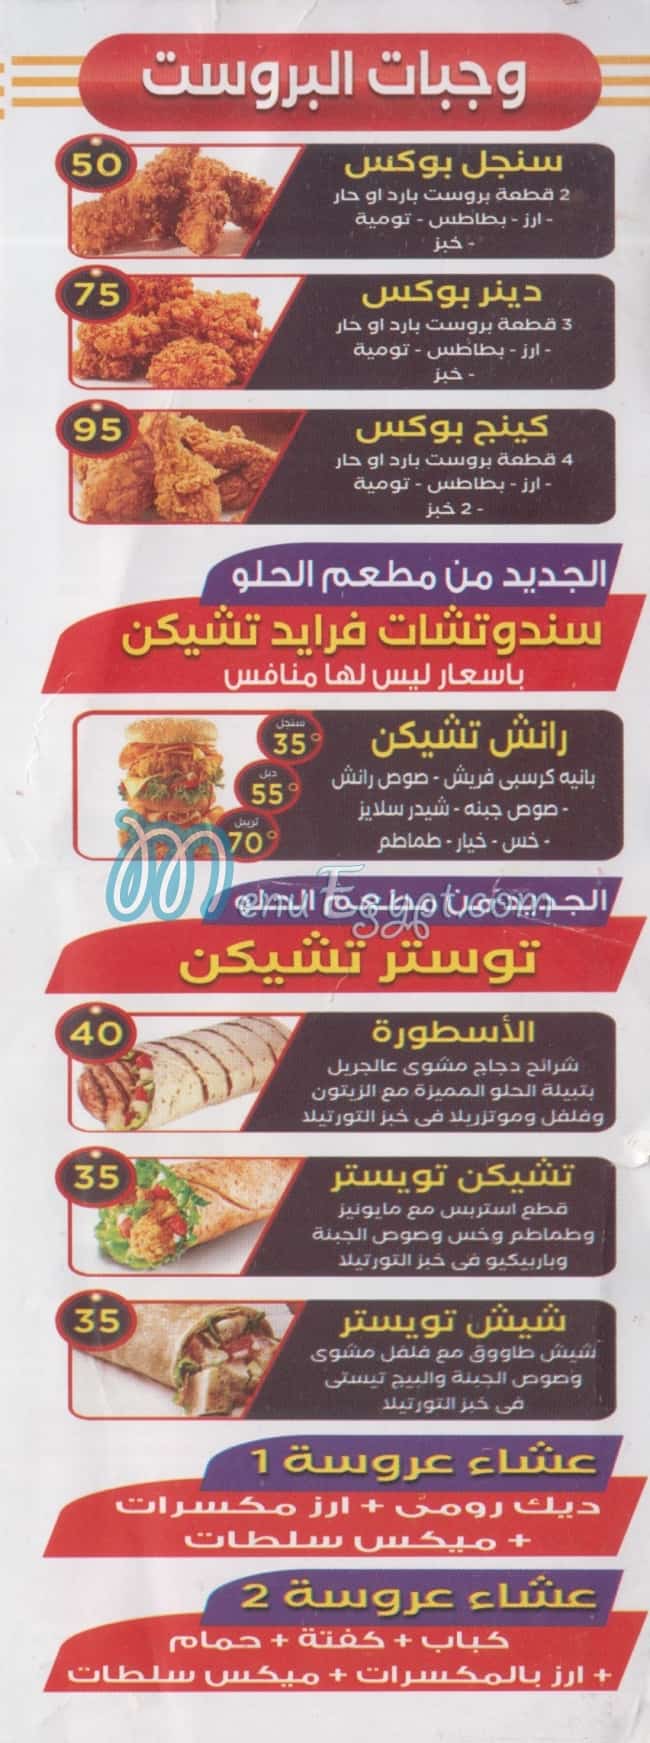 مطعم الحلو مصر